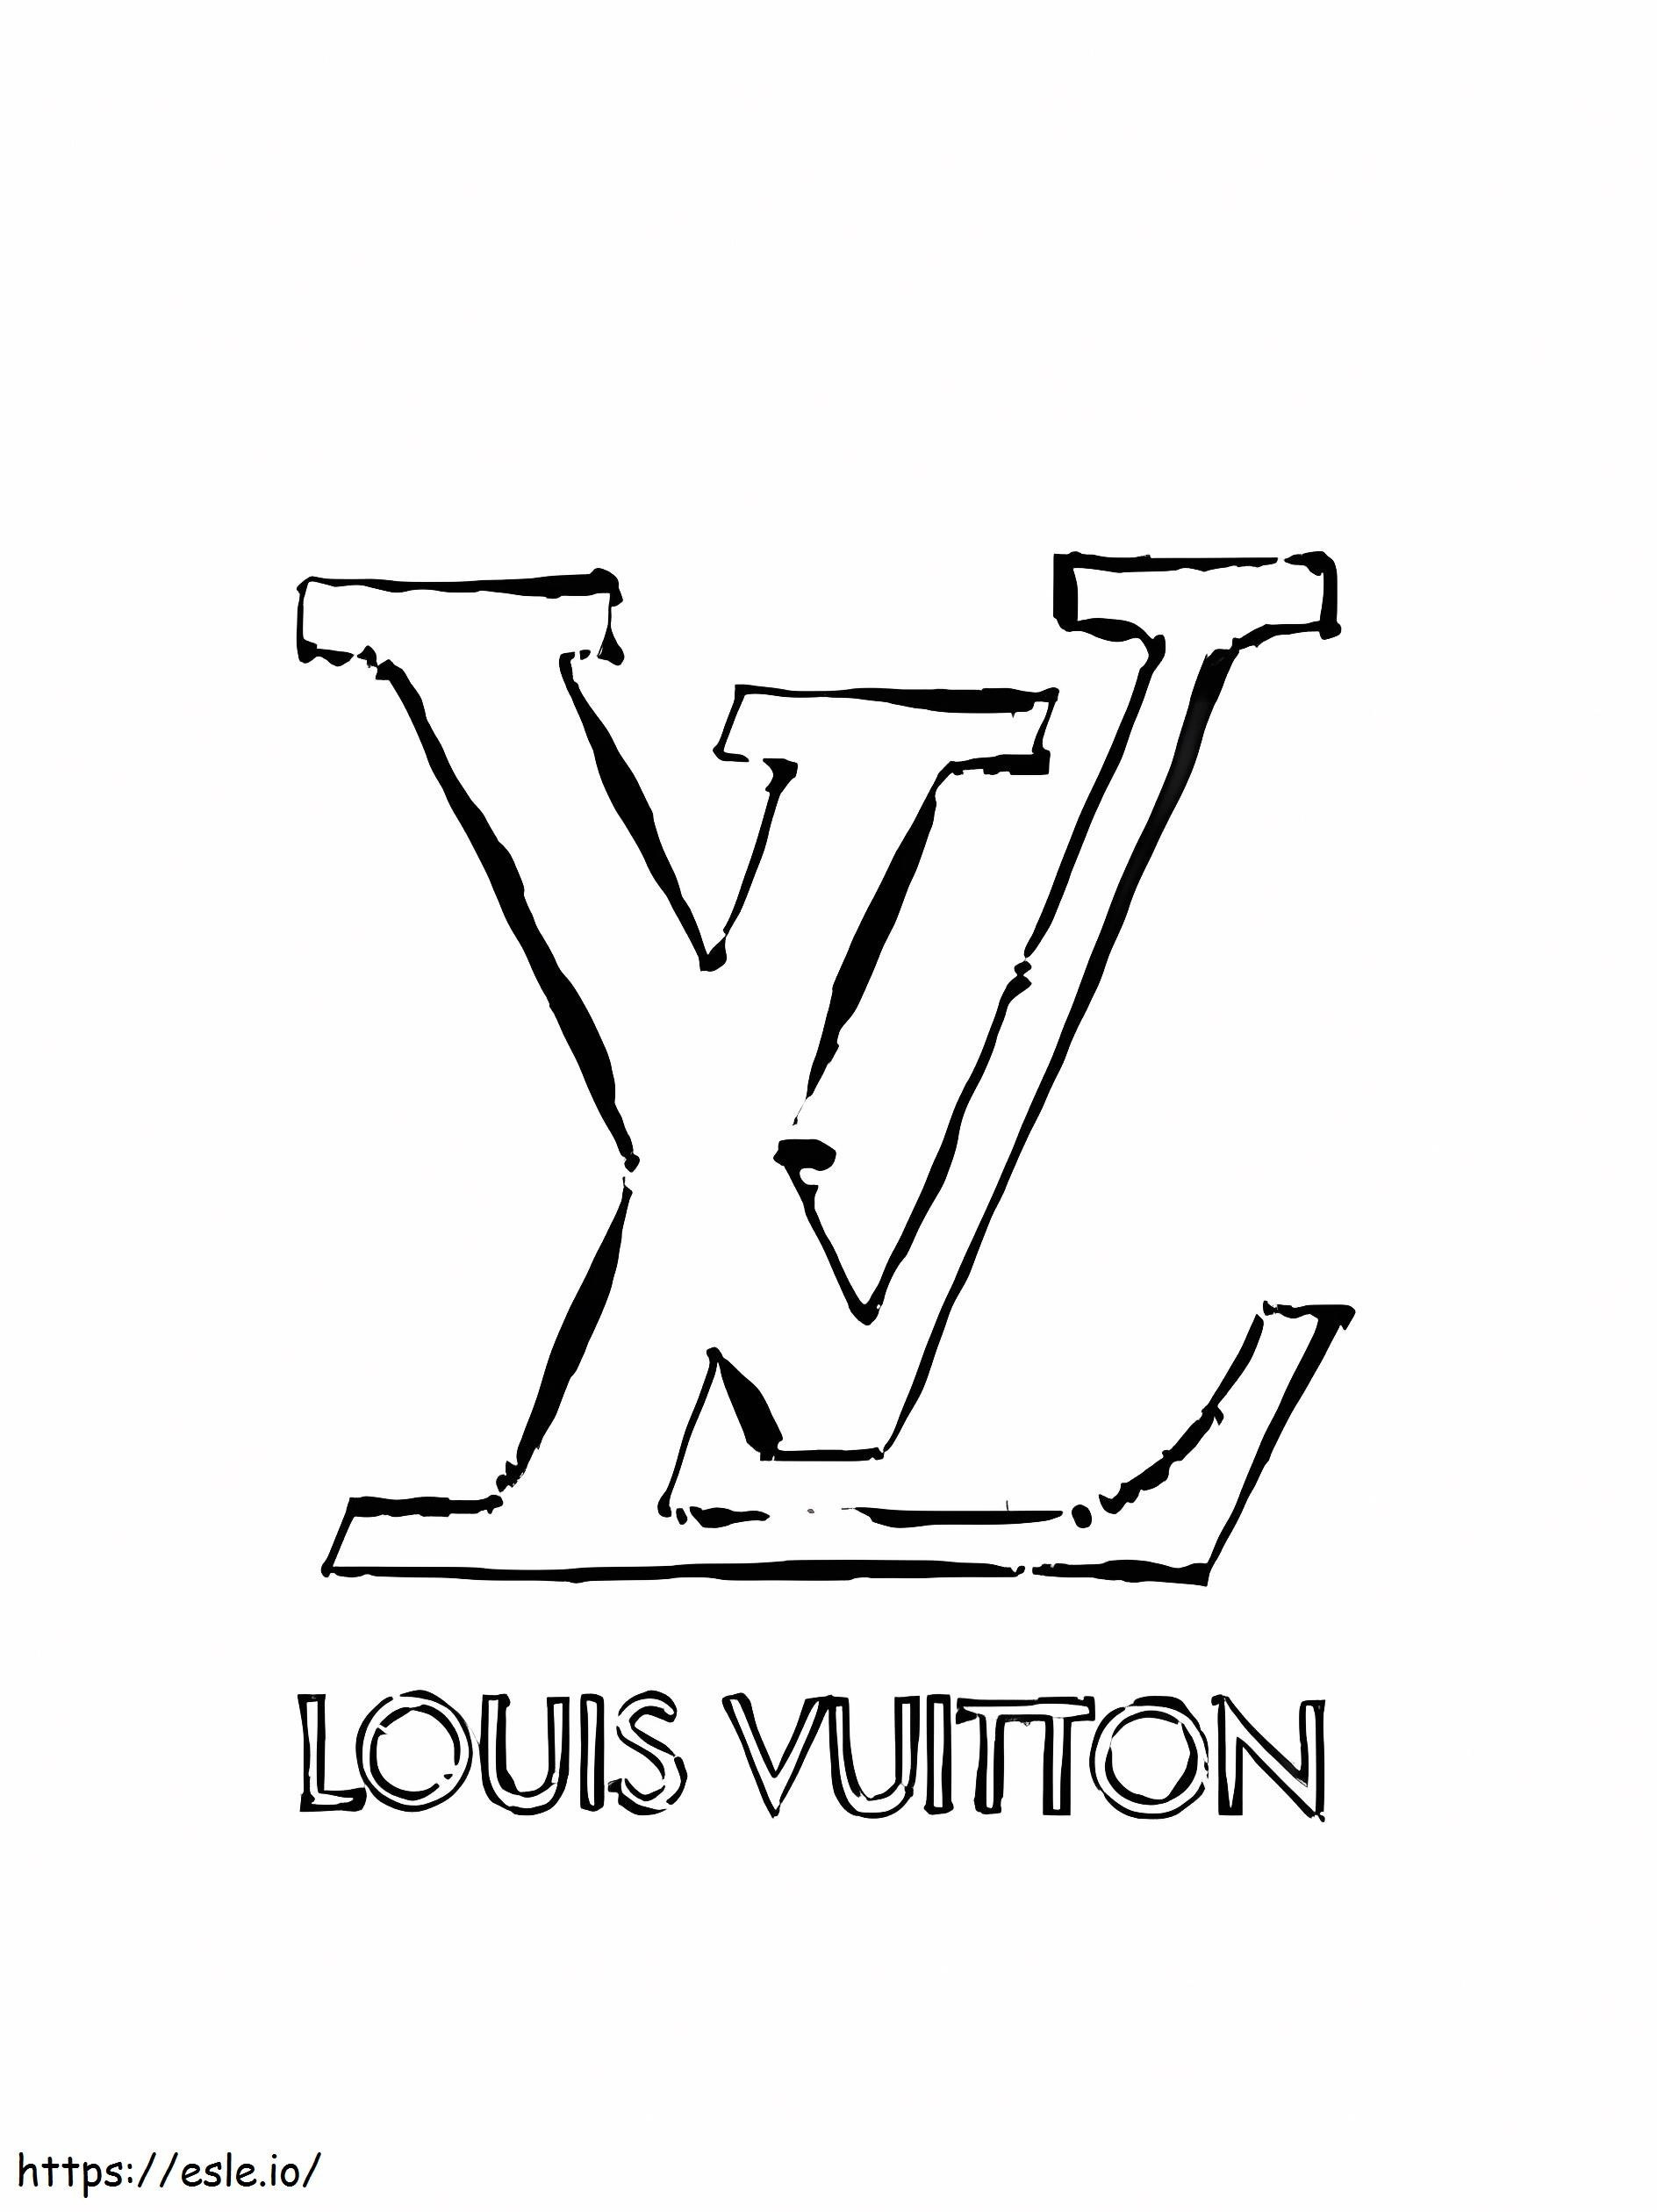 Louis Vuitton Logo Coloring Pages - Lv Coloring Pages - Coloring